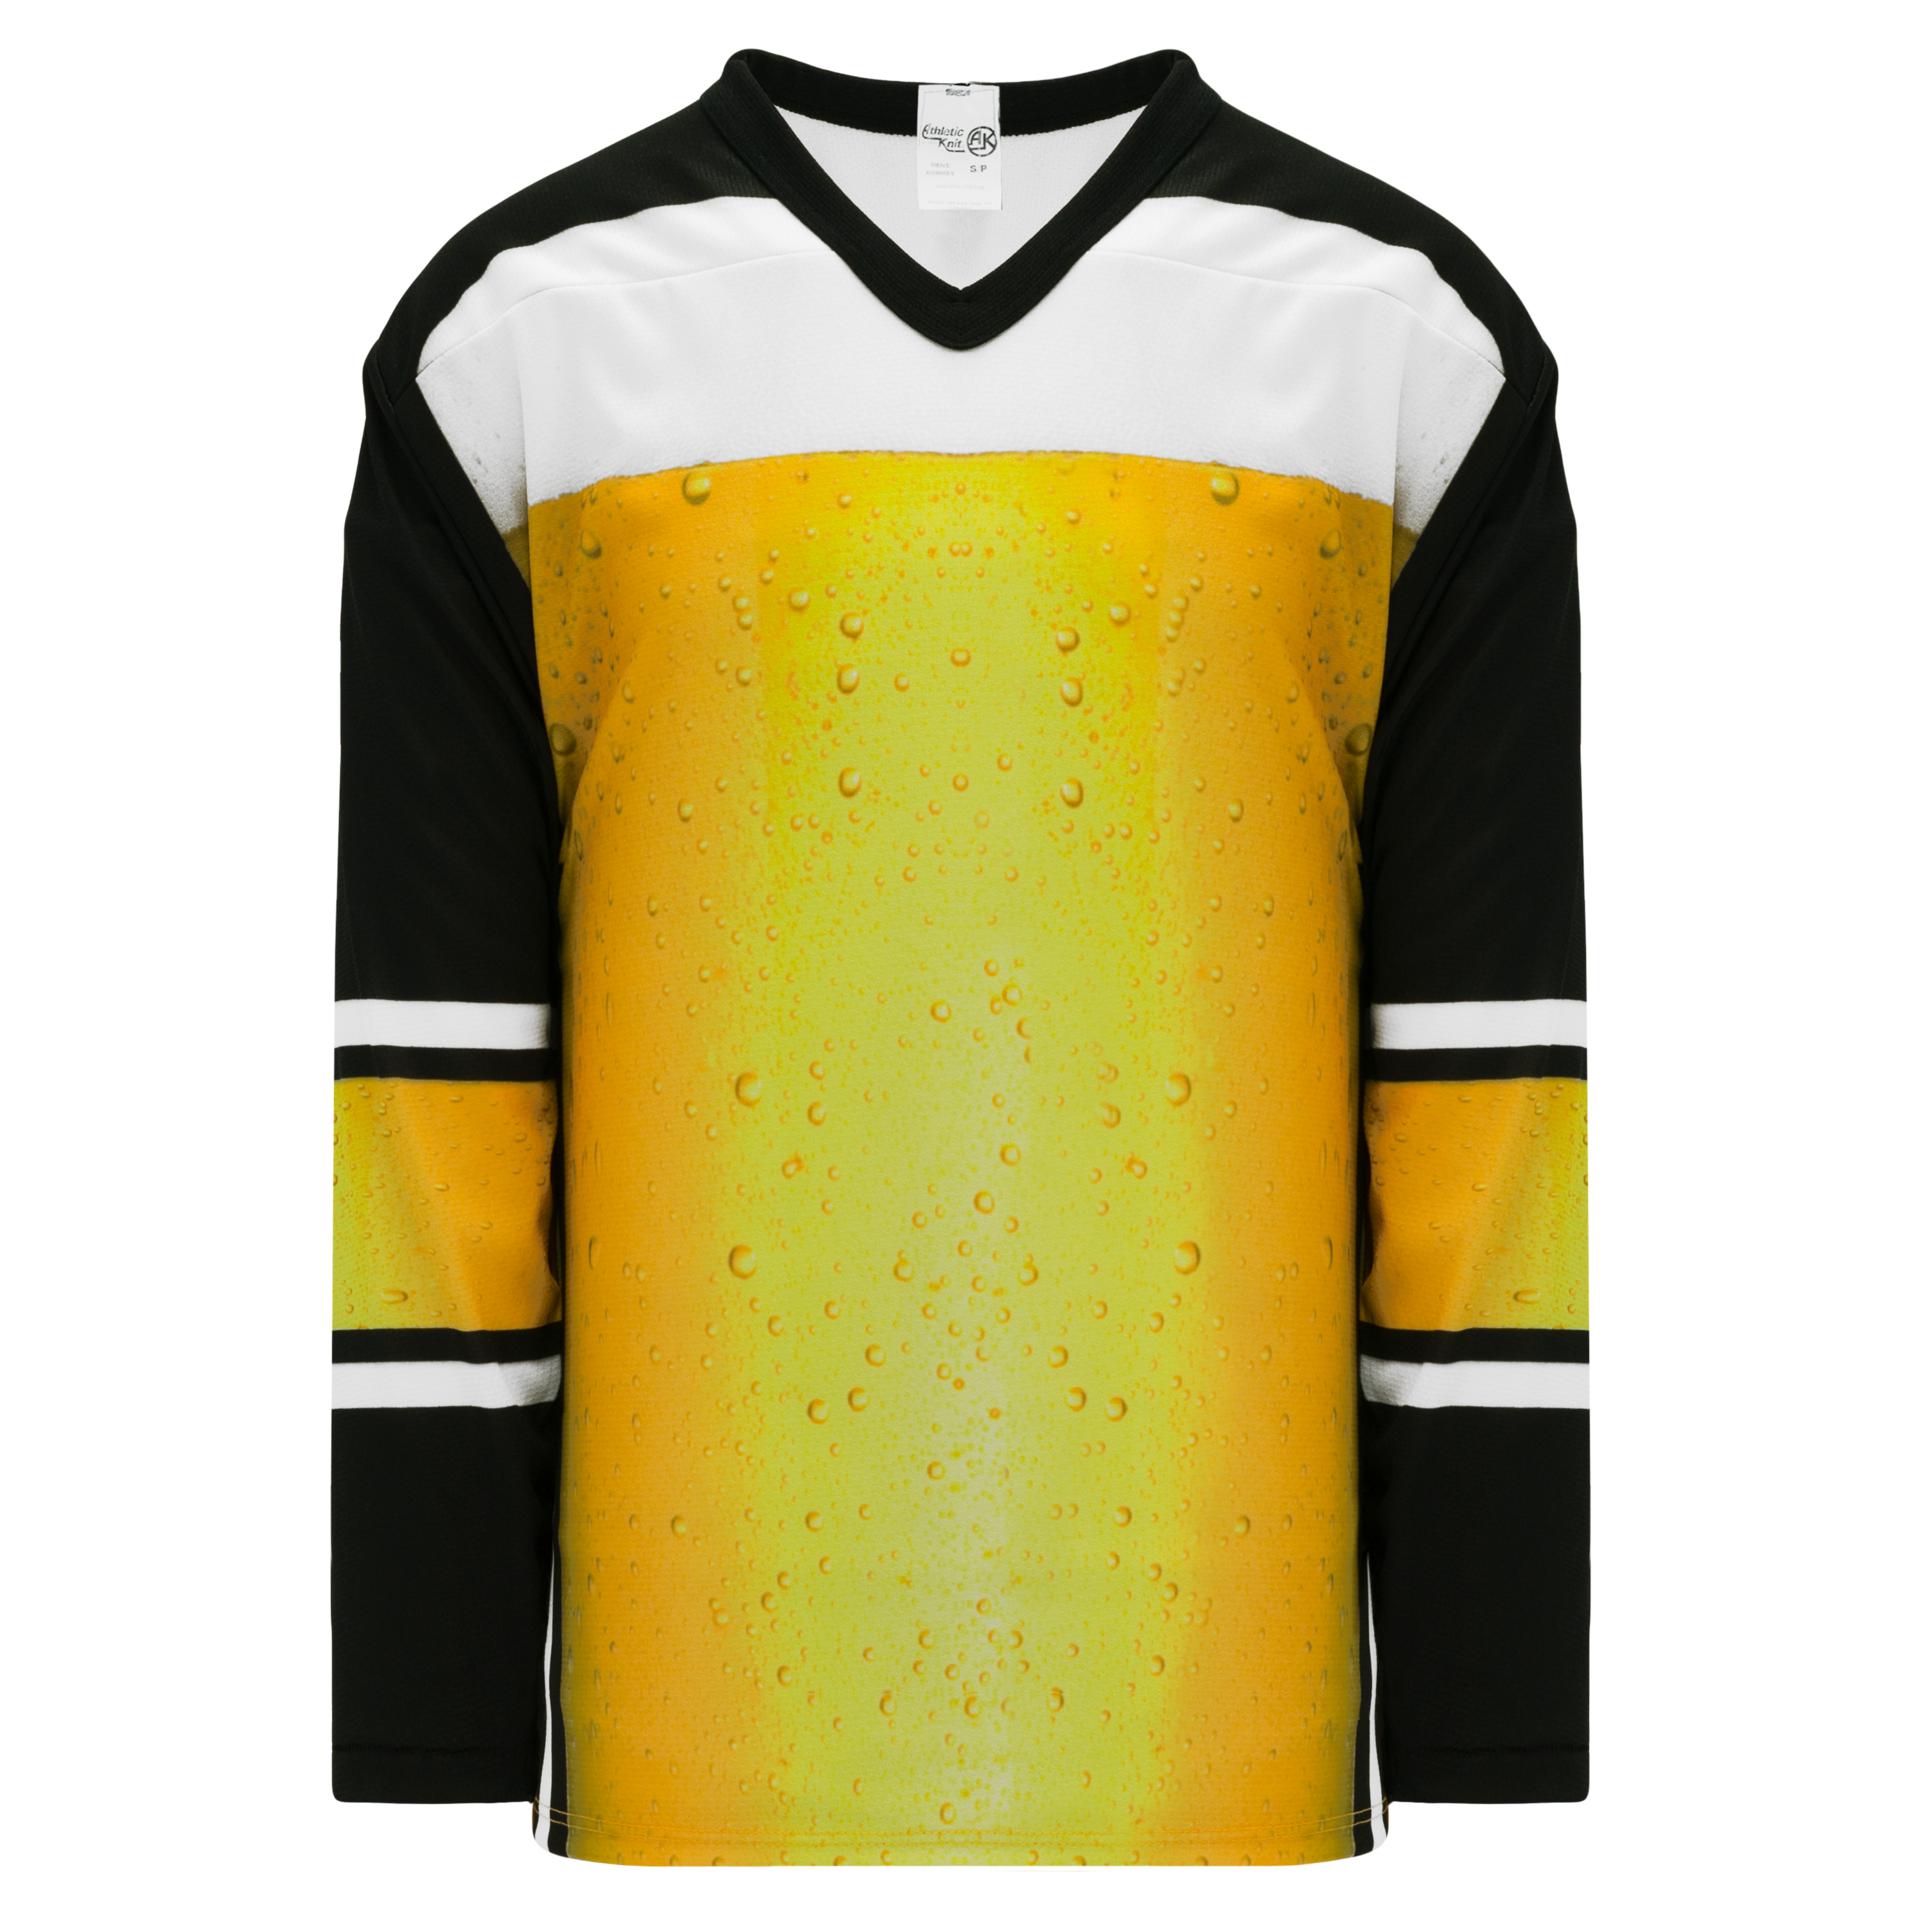 White Black Yellow Sublimated Custom Blank Hockey Jerseys | YoungSpeeds